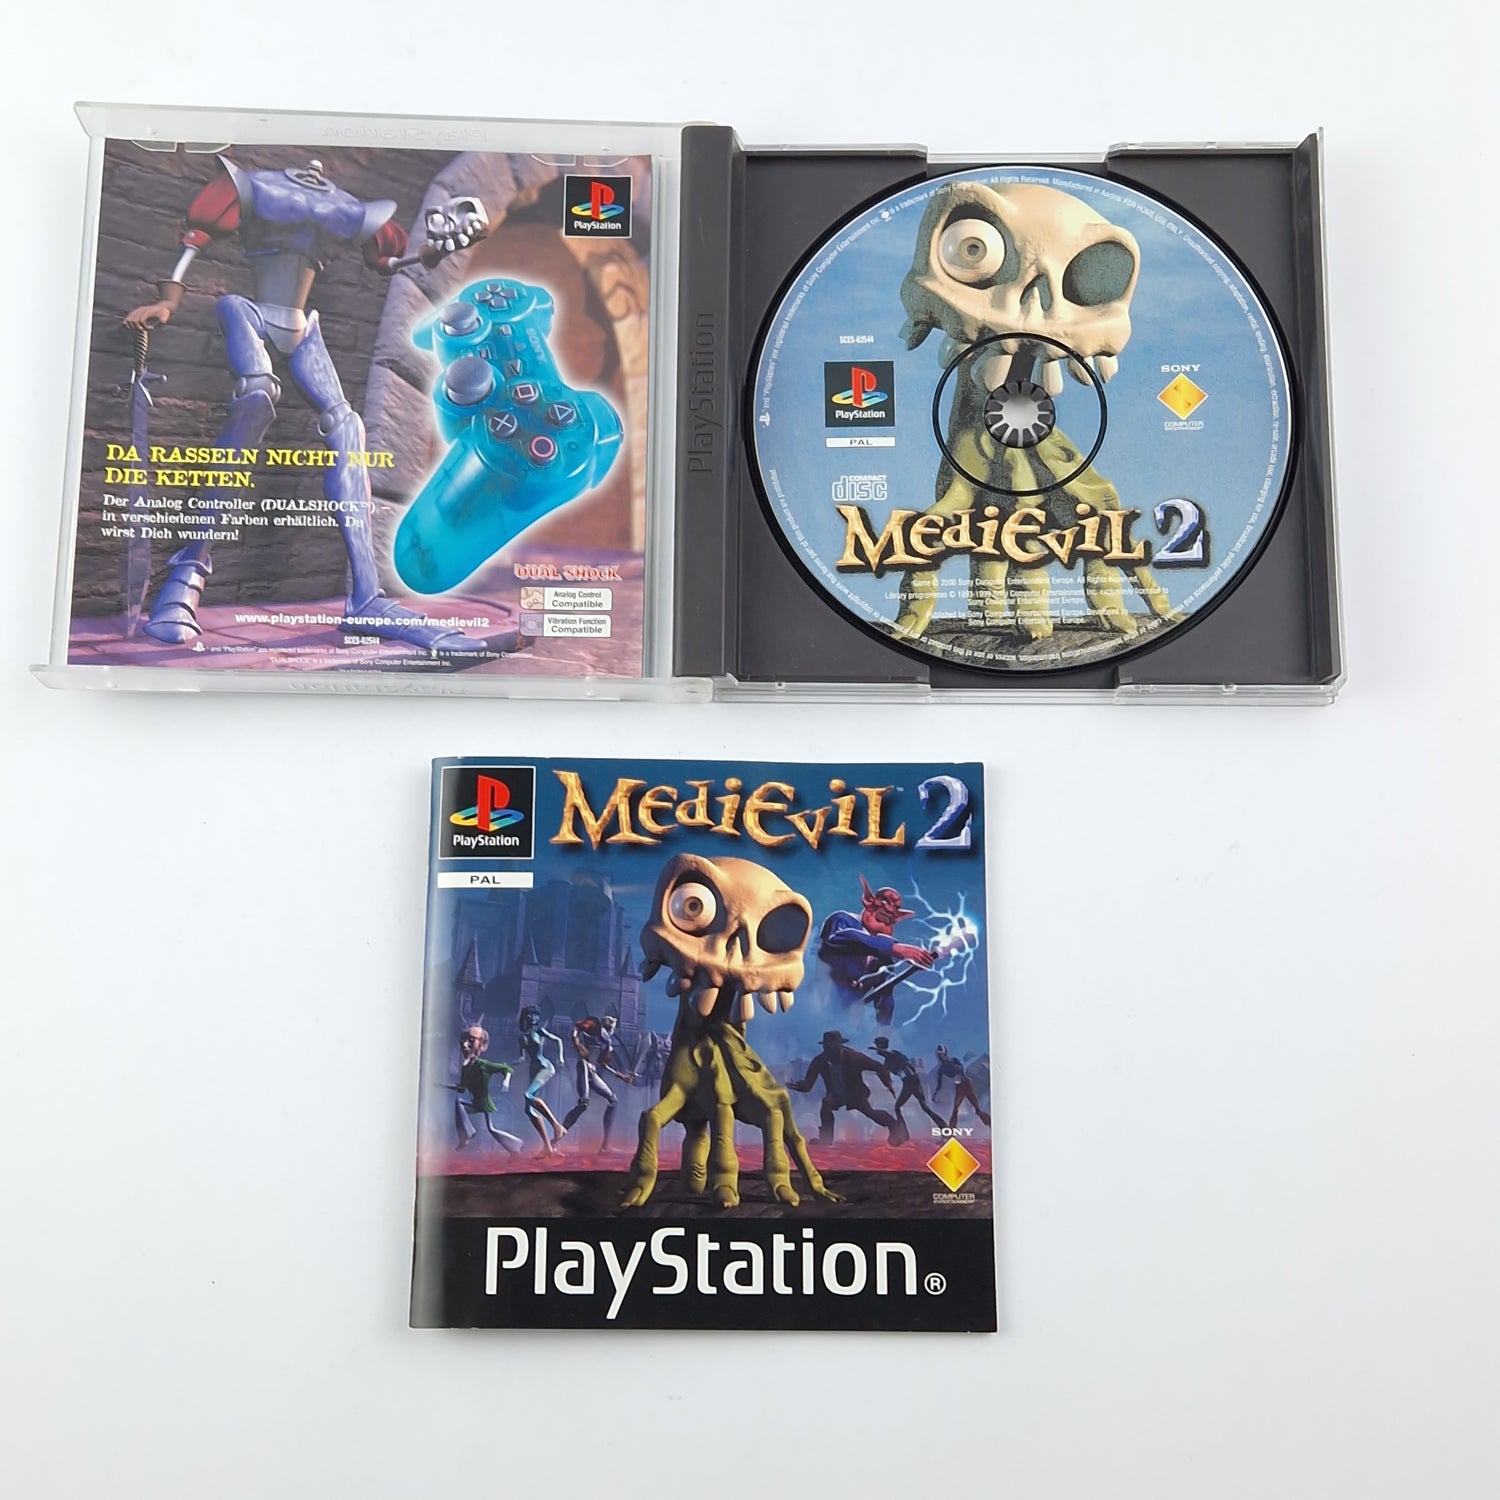 Playstation 1 game: Medi Evil 2 - OVP instructions CD / SONY PS1 PSX PAL